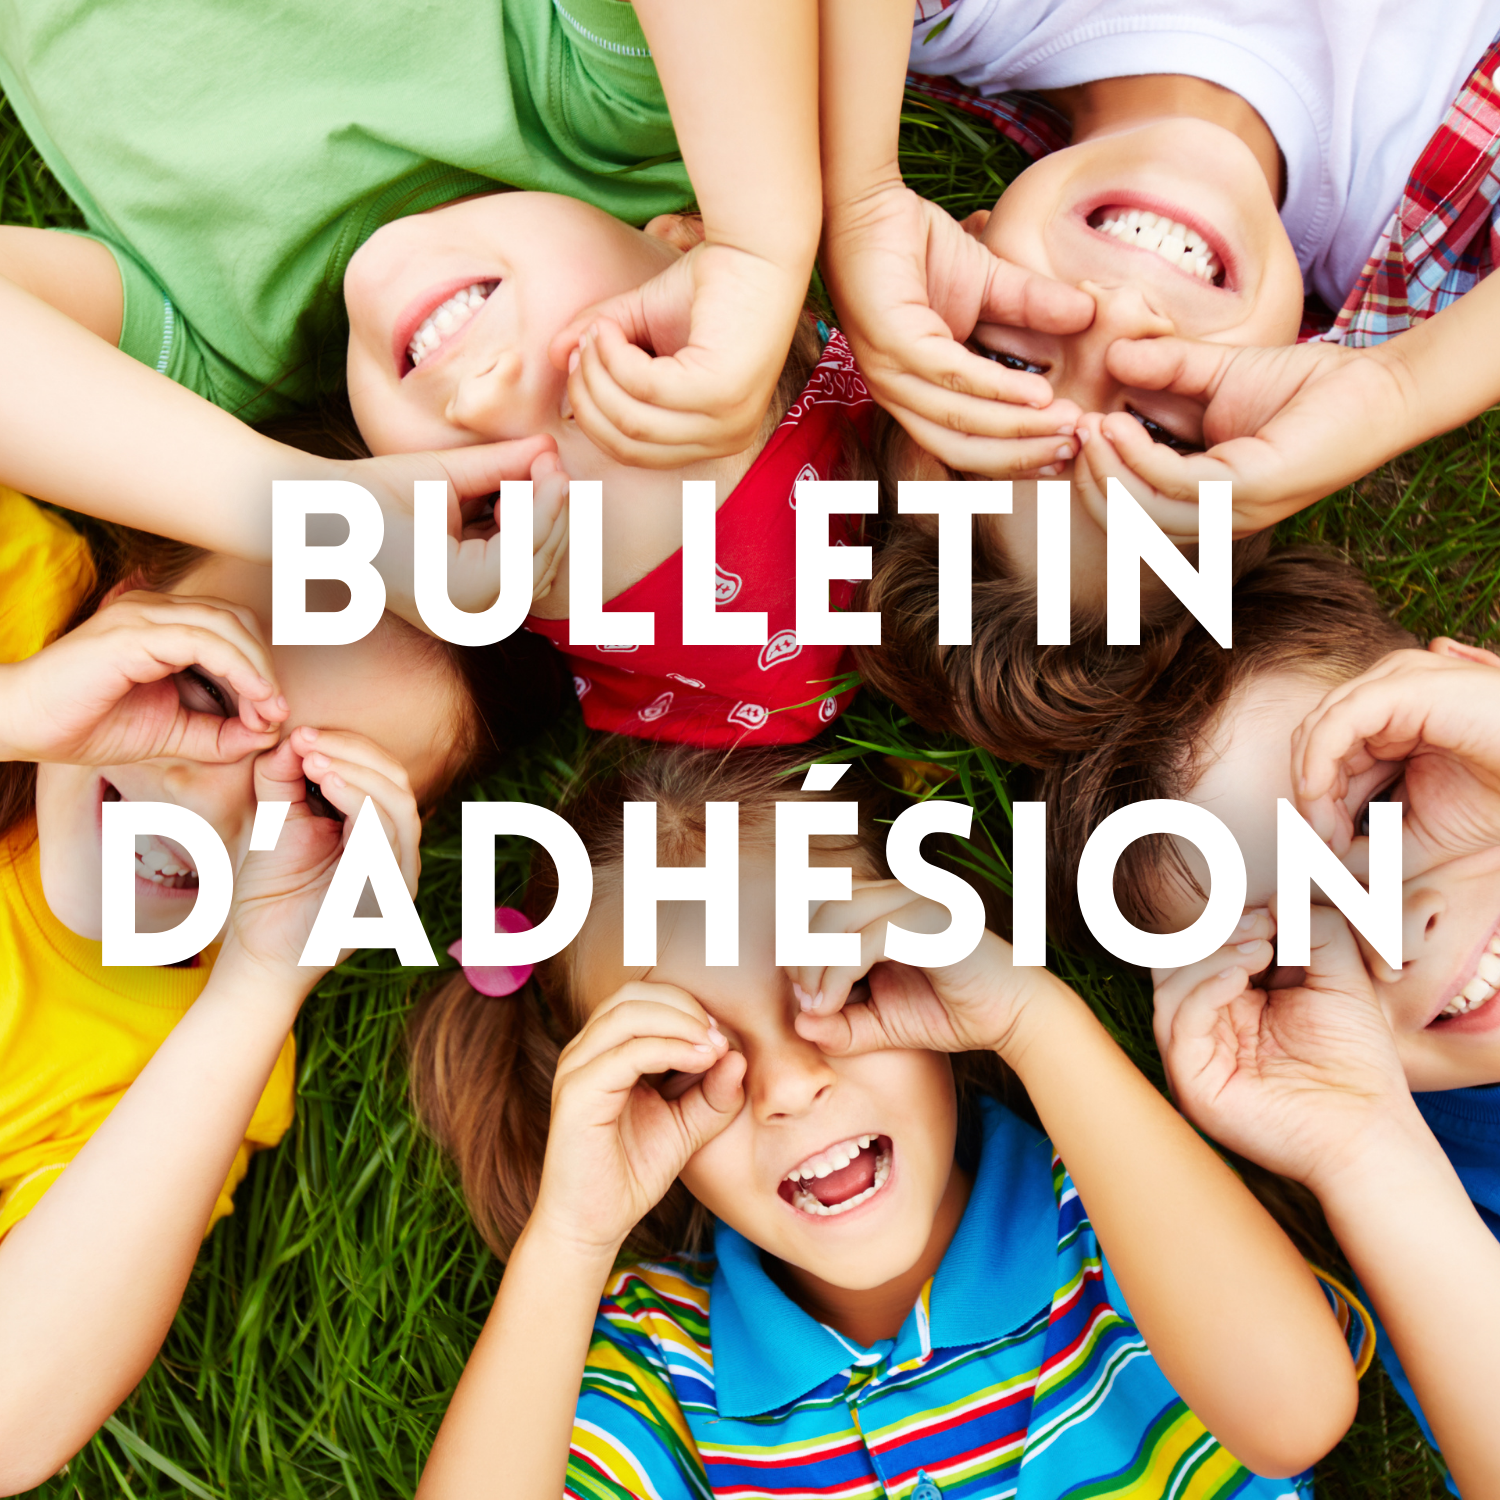 Bulletin adhesion